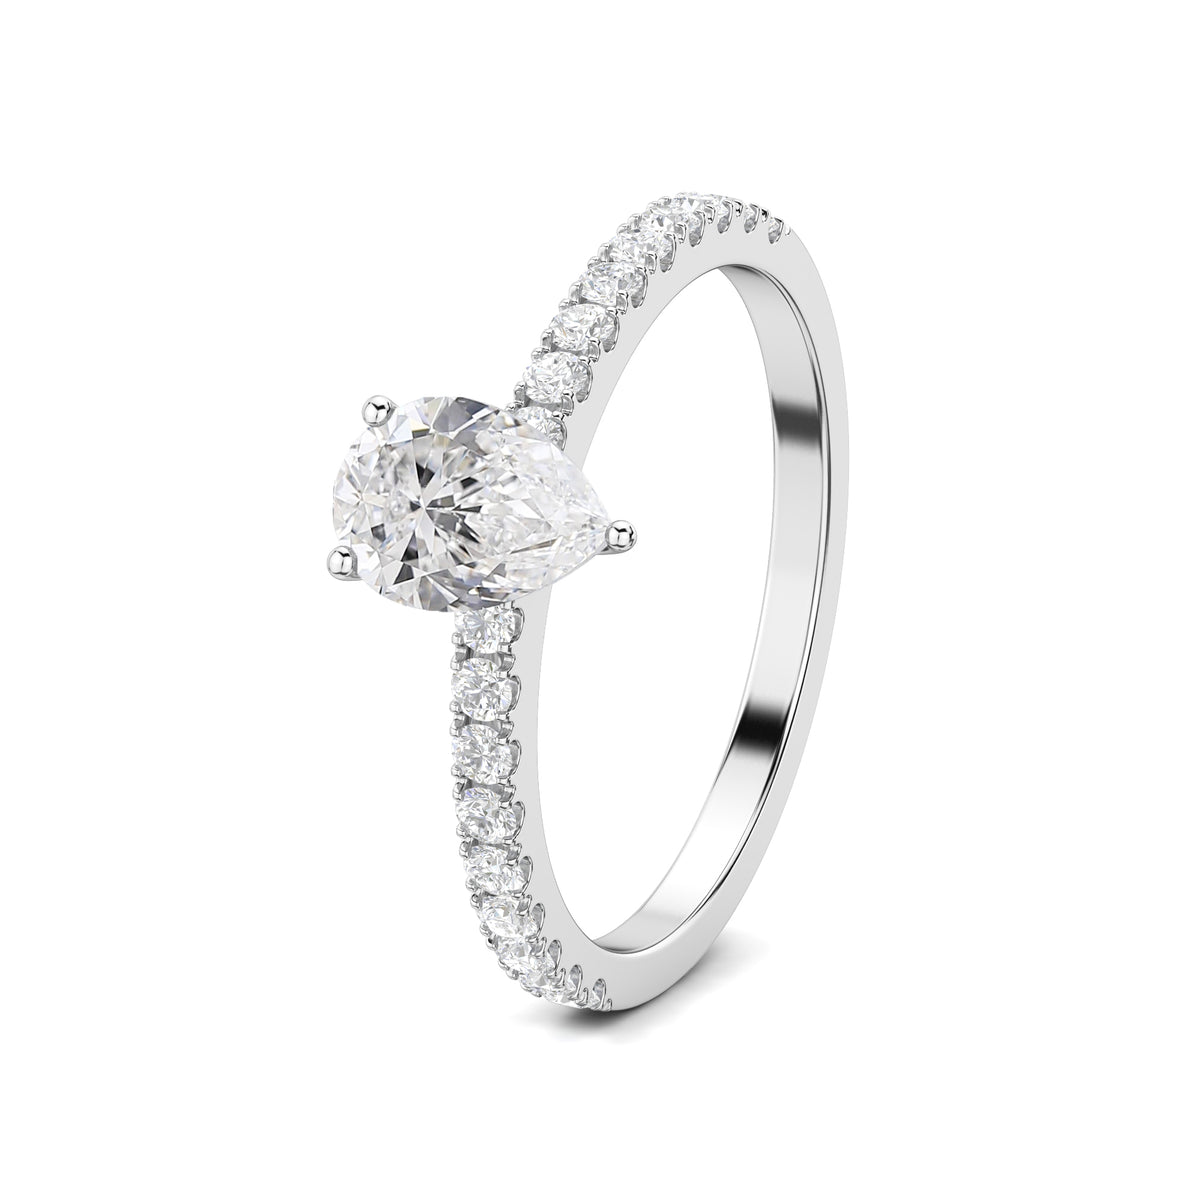 Pear-shaped diamond engagement ring with pavé band - Emma | Beldiamond